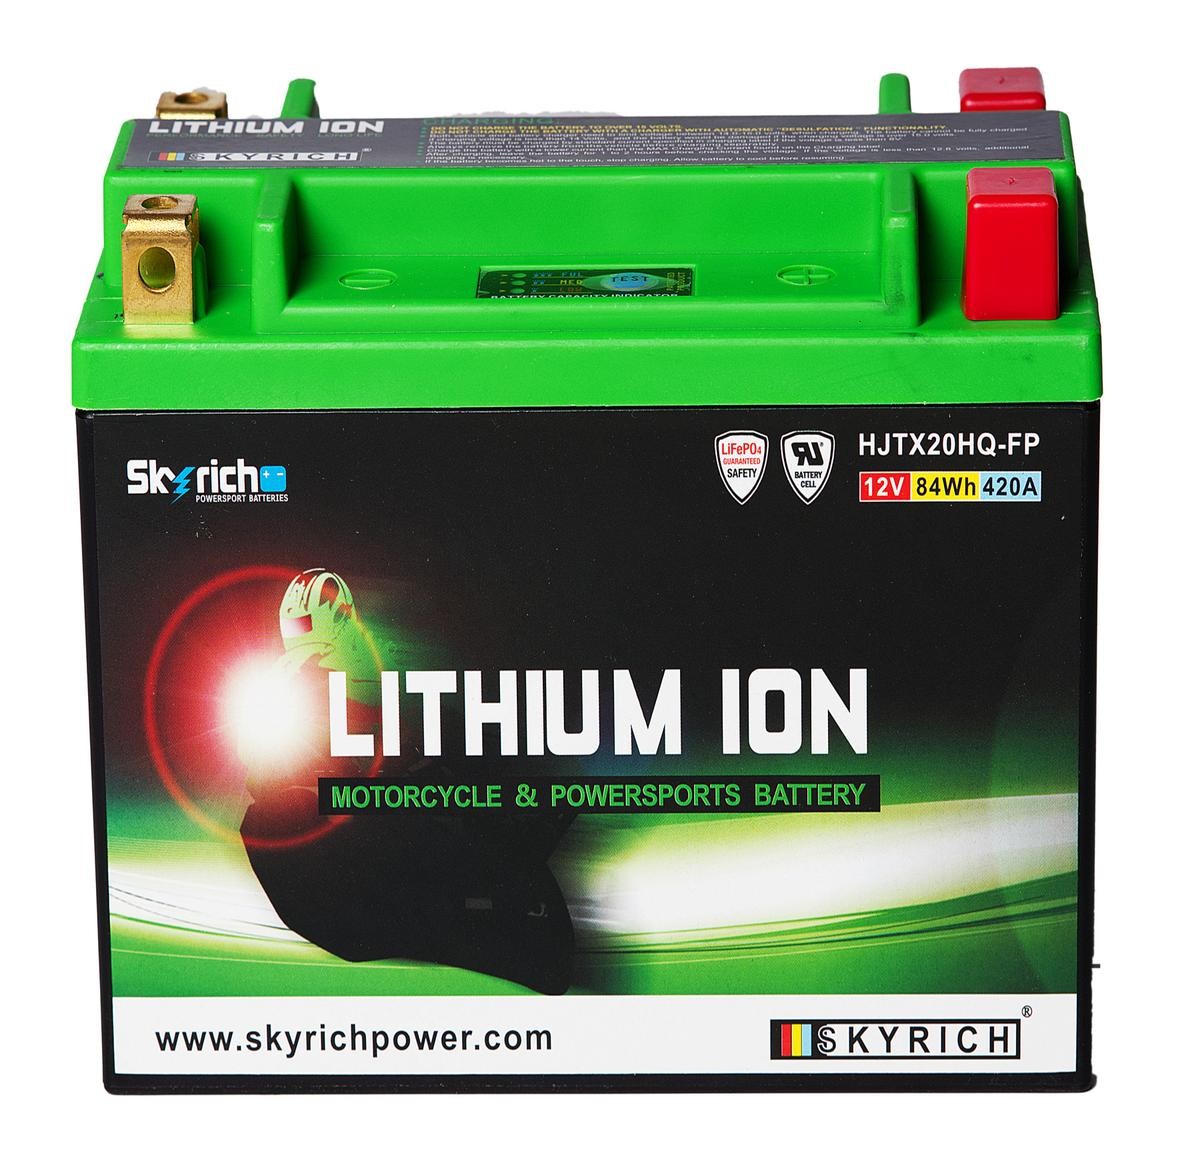 SKYRICH LITHIUM ION 12V 7Ah 420A N Li-Ion Battery Cold-test Current, EN: 420A, Voltage: 12V, Terminal Placement: 1 Starter battery HJTX20HQ-FP buy